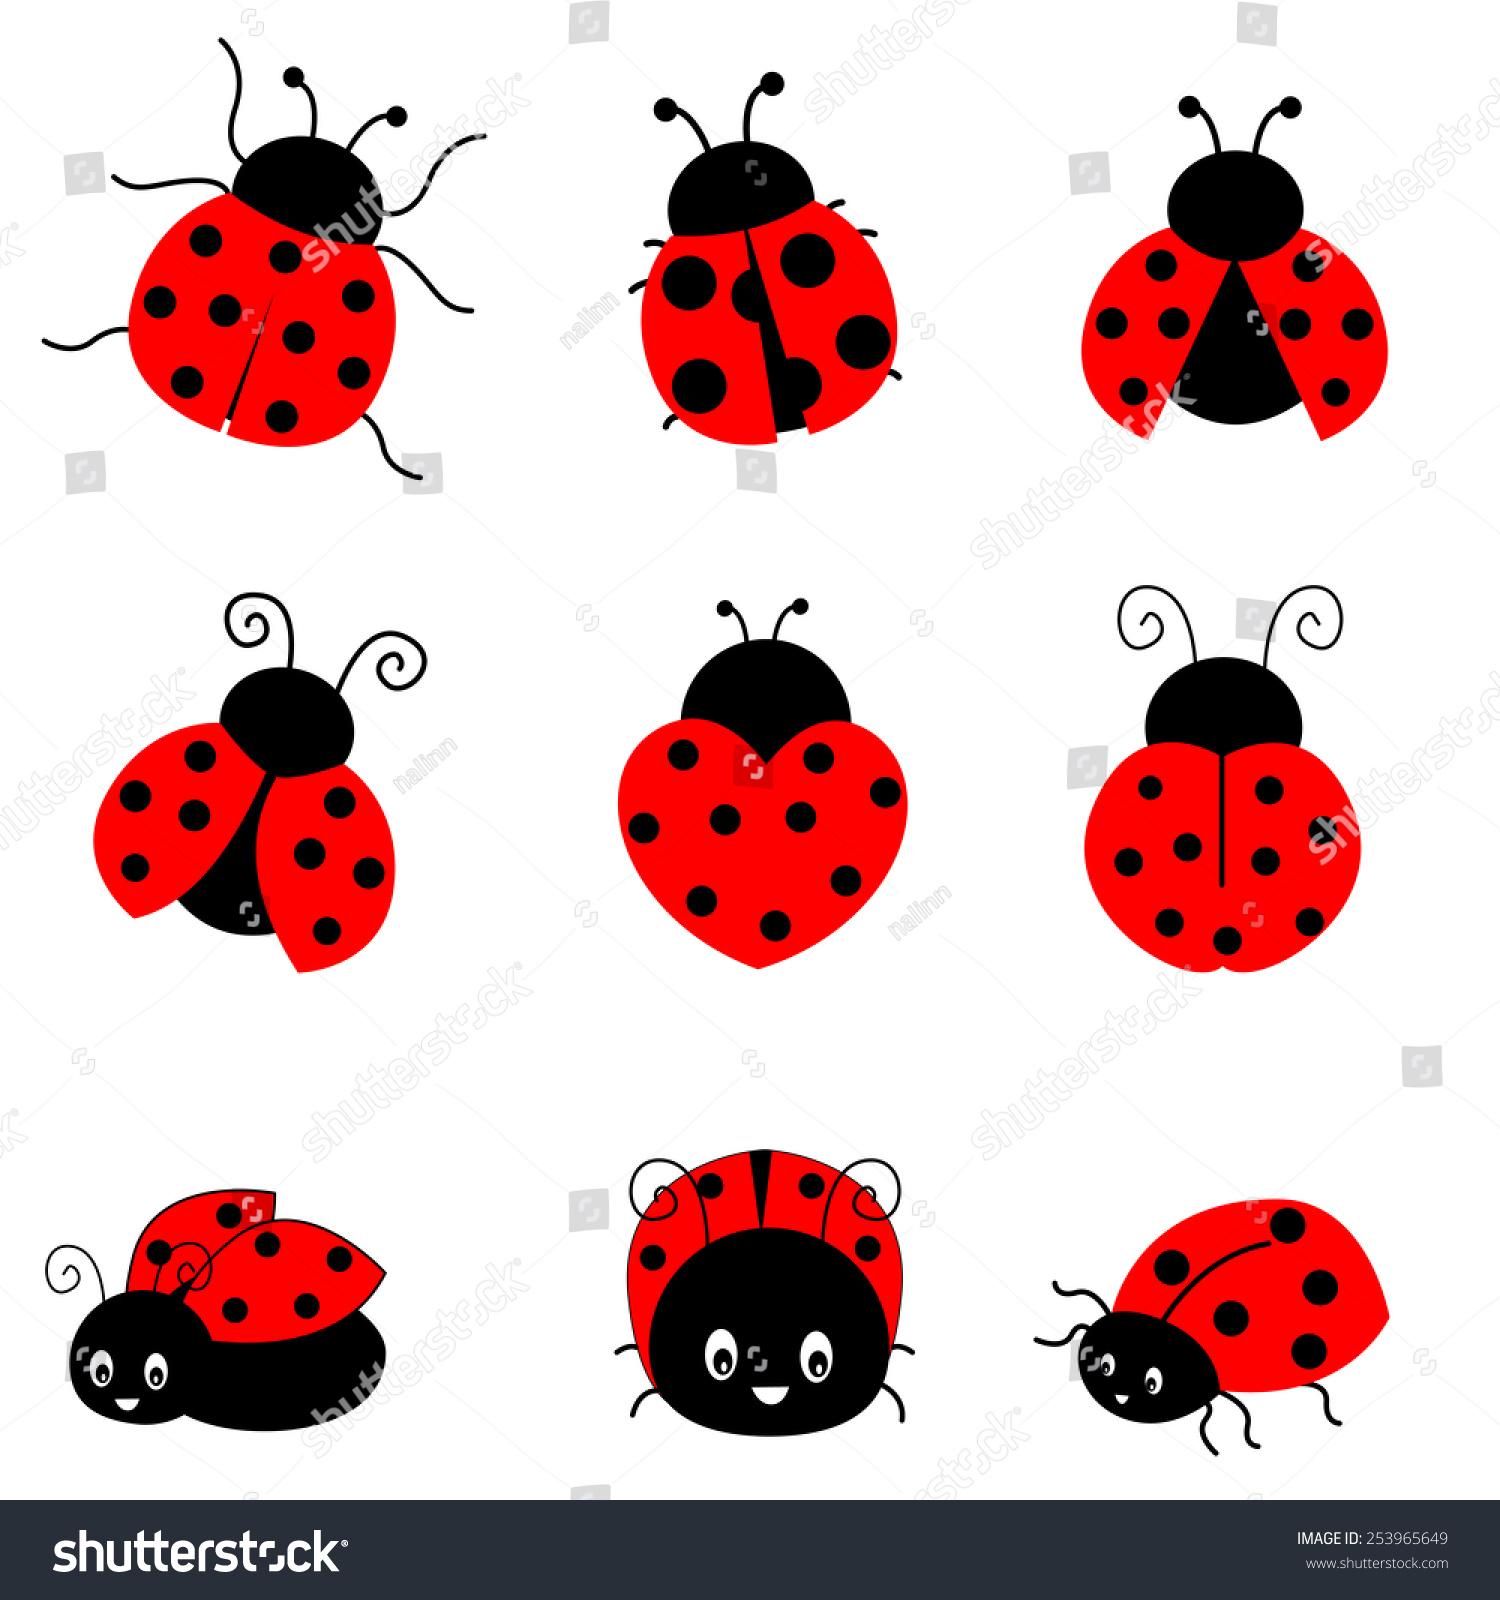 cute ladybug clipart free - photo #40